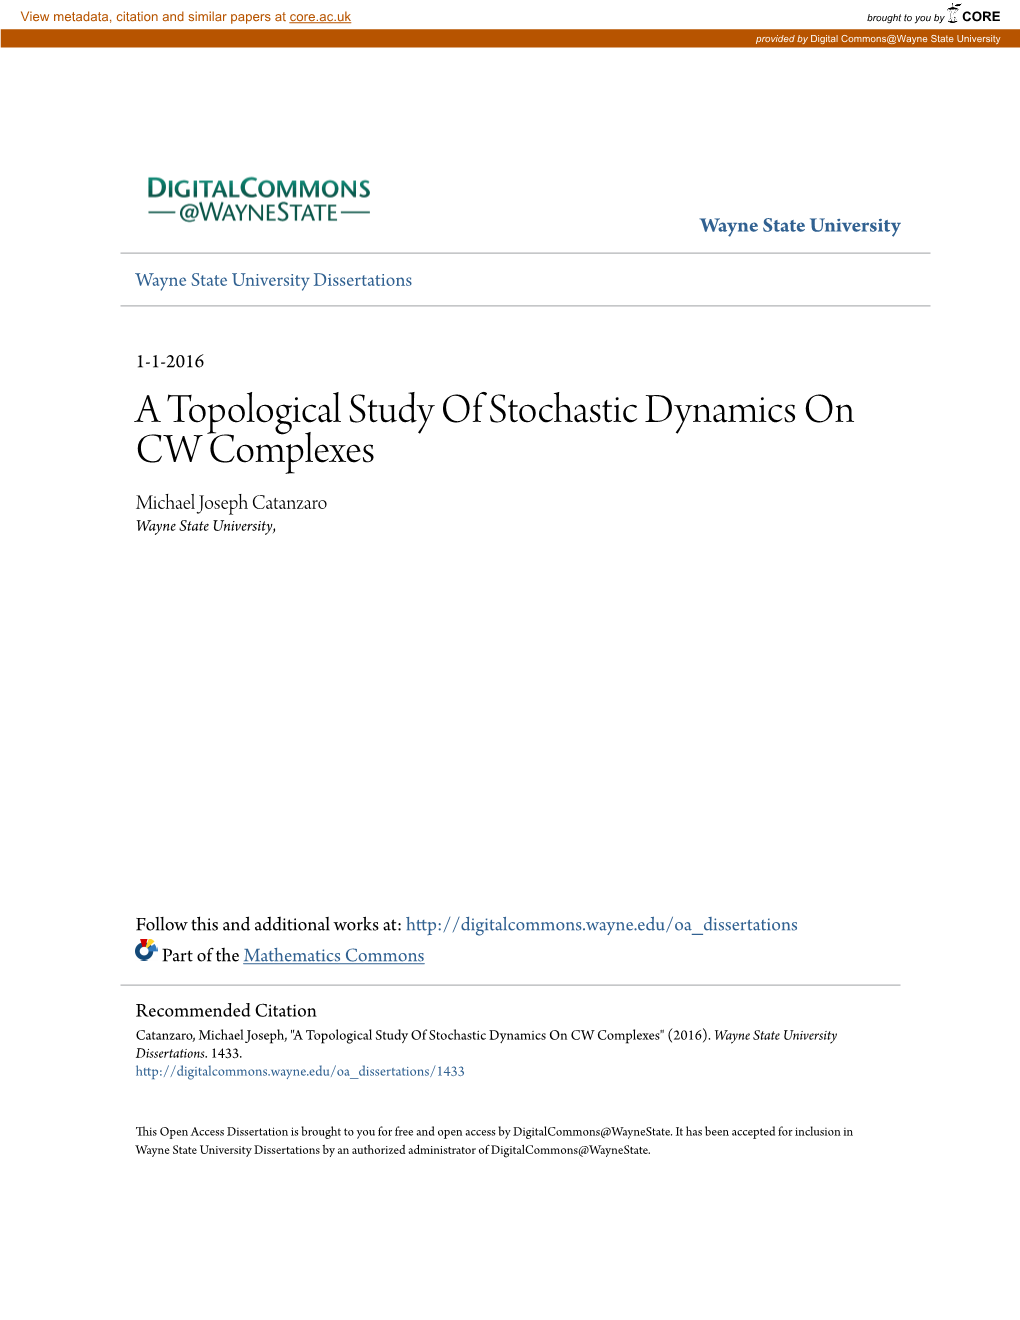 A Topological Study of Stochastic Dynamics on CW Complexes Michael Joseph Catanzaro Wayne State University